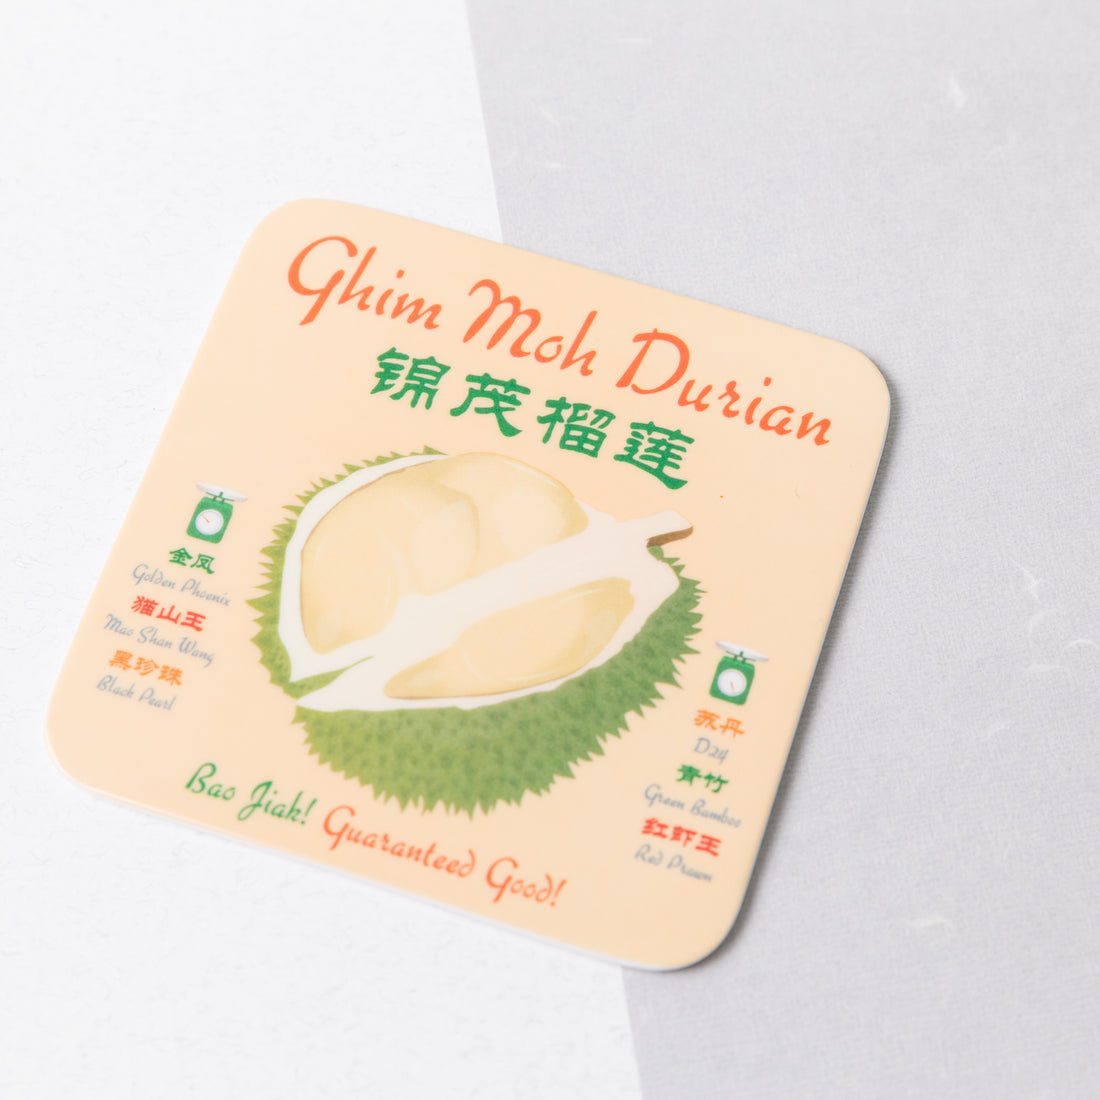 Ghim Moh Durian Melamine Coaster